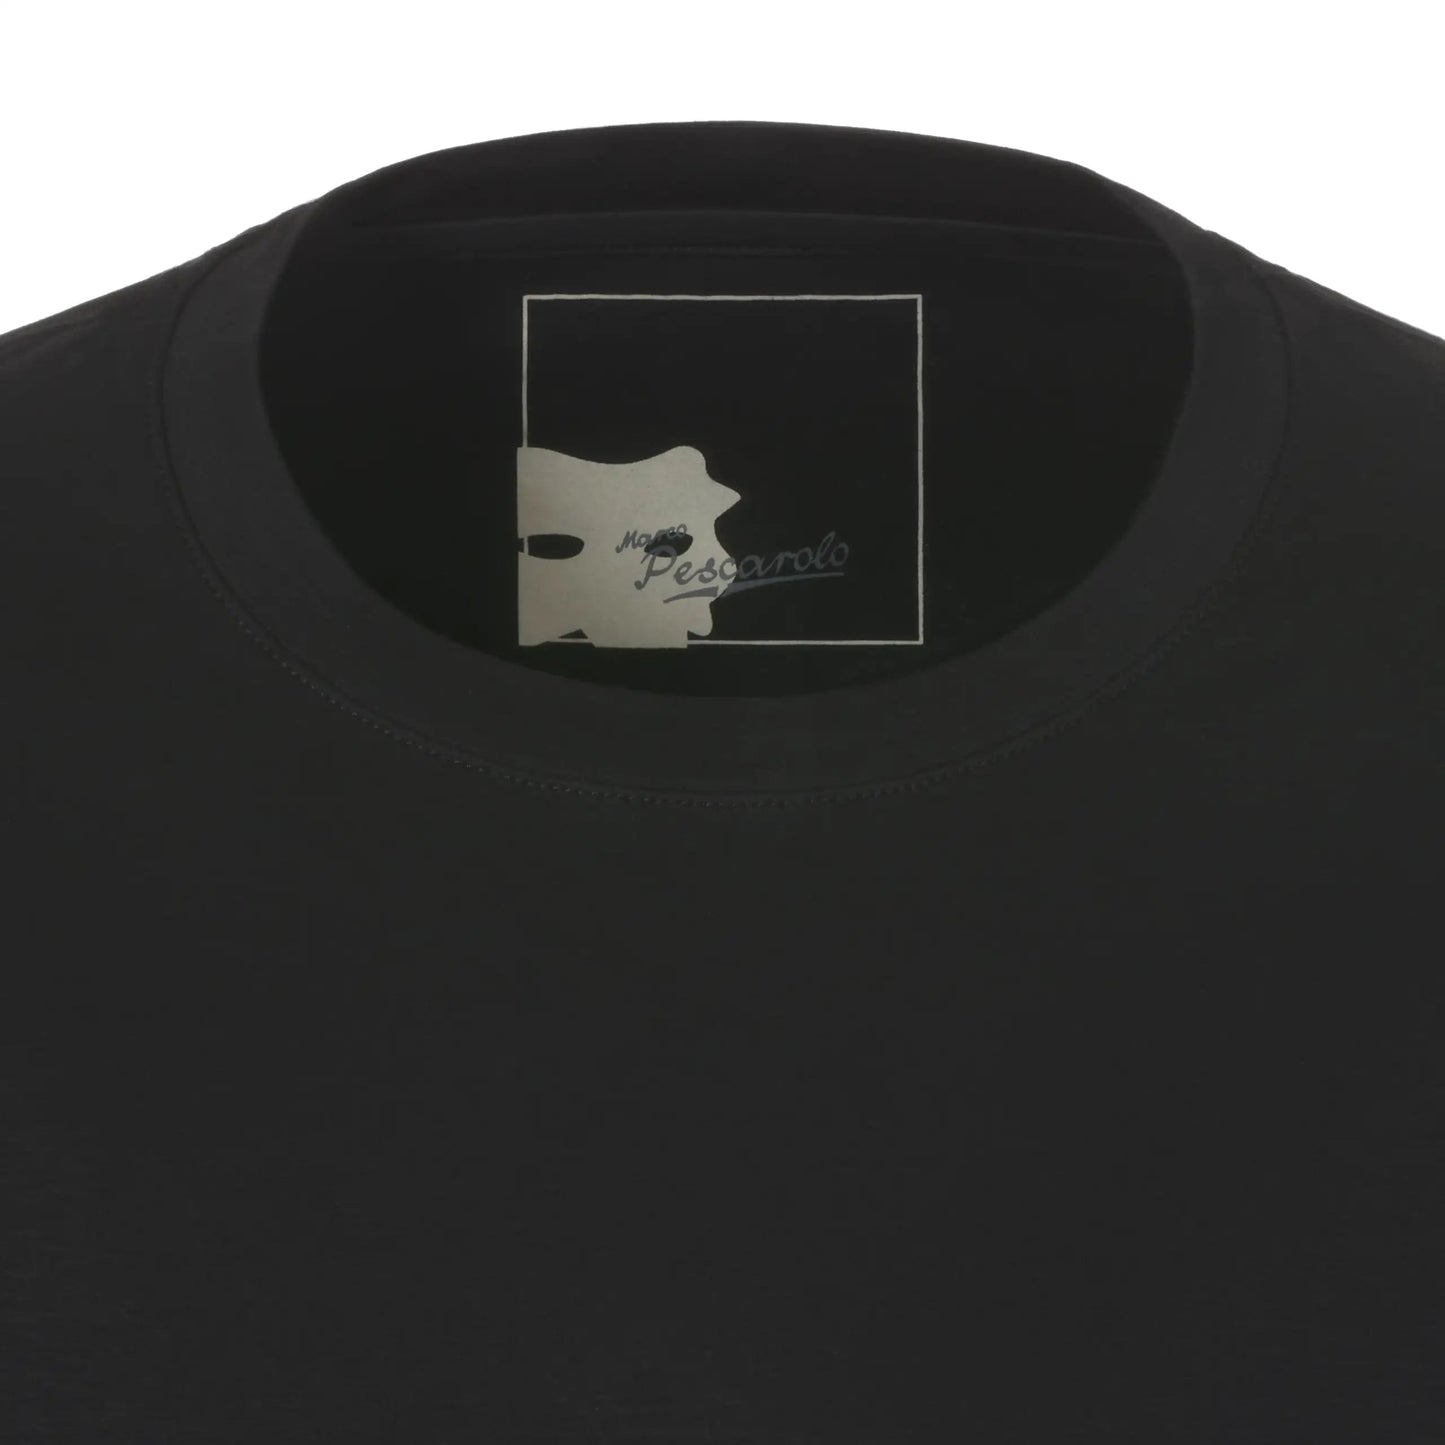 Marco Pescarolo Crew-Neck Cotton T-Shirt in Black - SARTALE